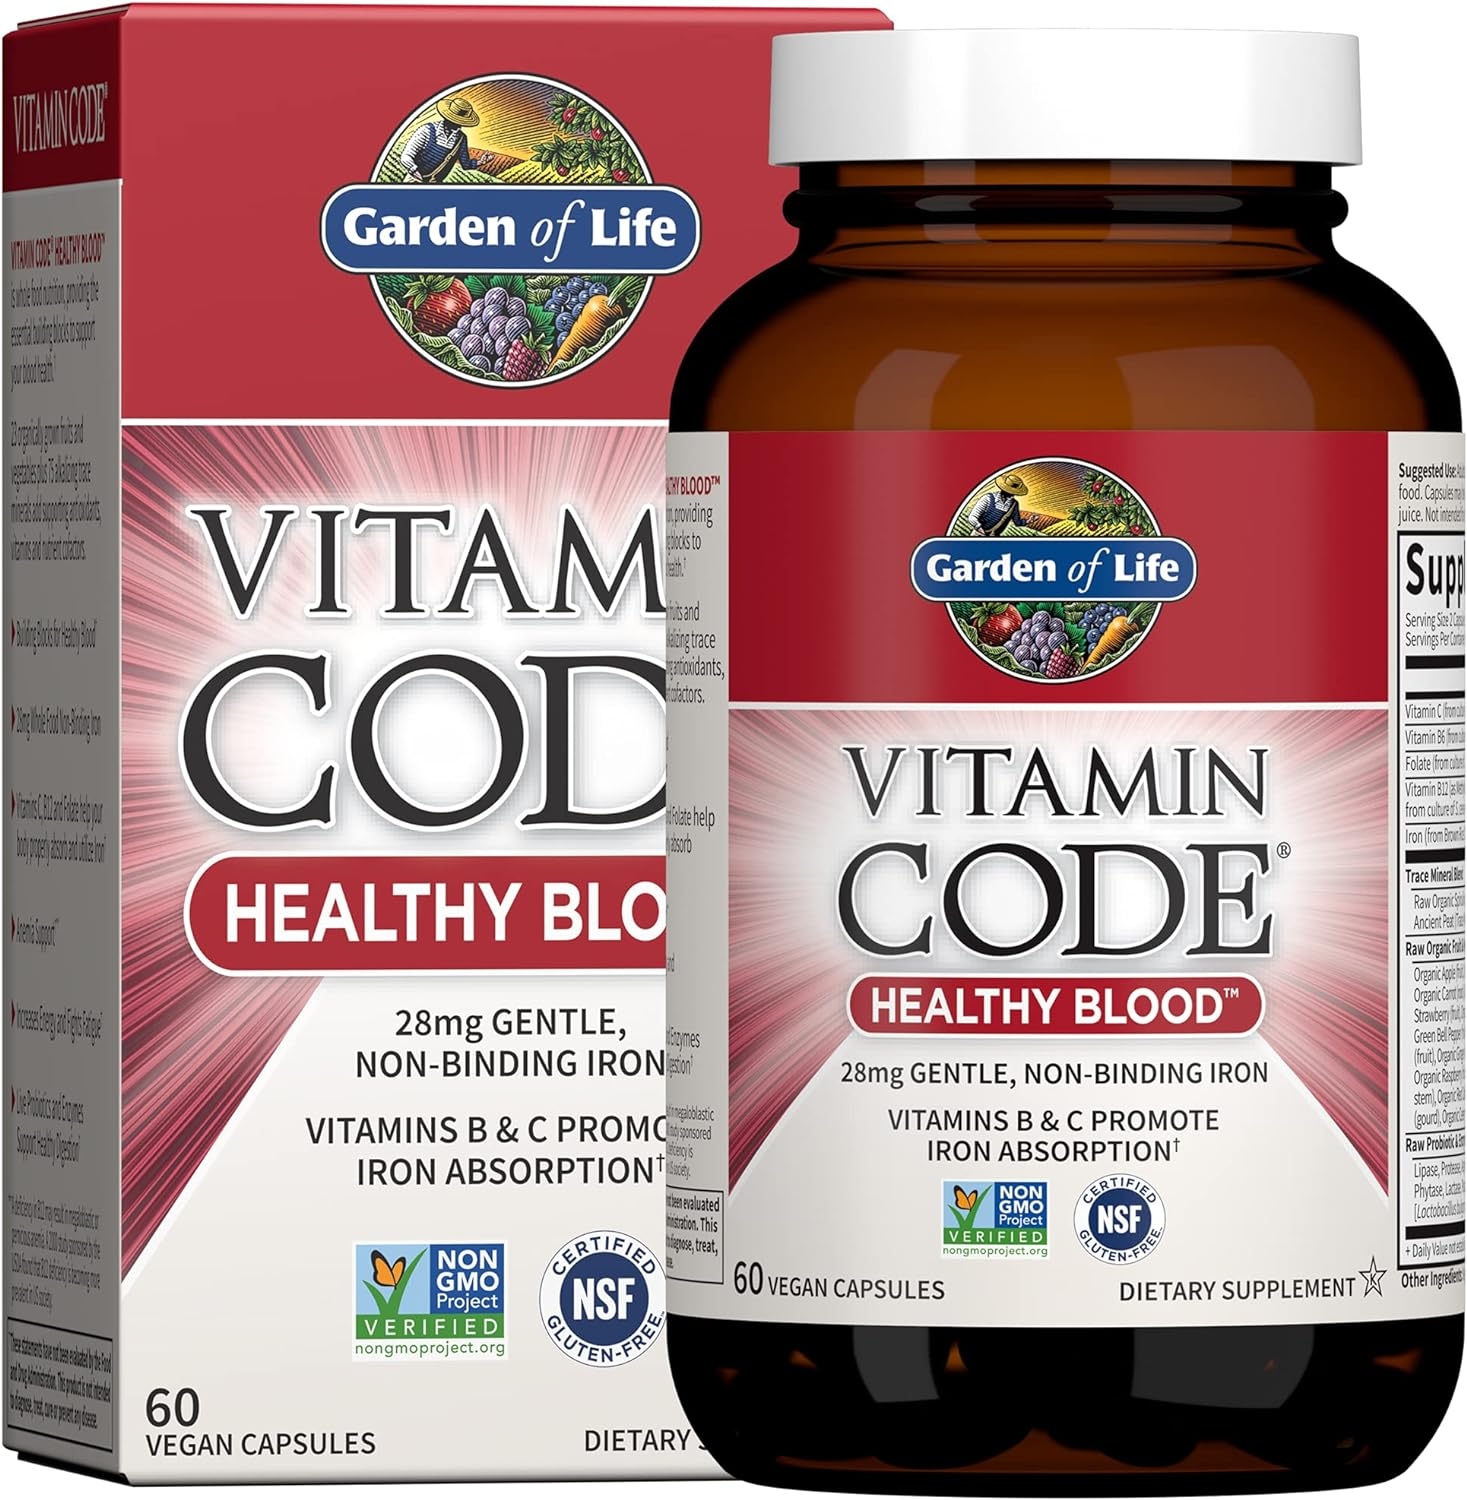 Garden of Life Vitamin Code Iron Supplement, Healthy Blood - 60 Vegan Capsules, 28g Iron, Vitamins B, C, Trace Minerals, Fruit Veggies & Probiotics, Iron Supplements for Women Energy & Anemia Support